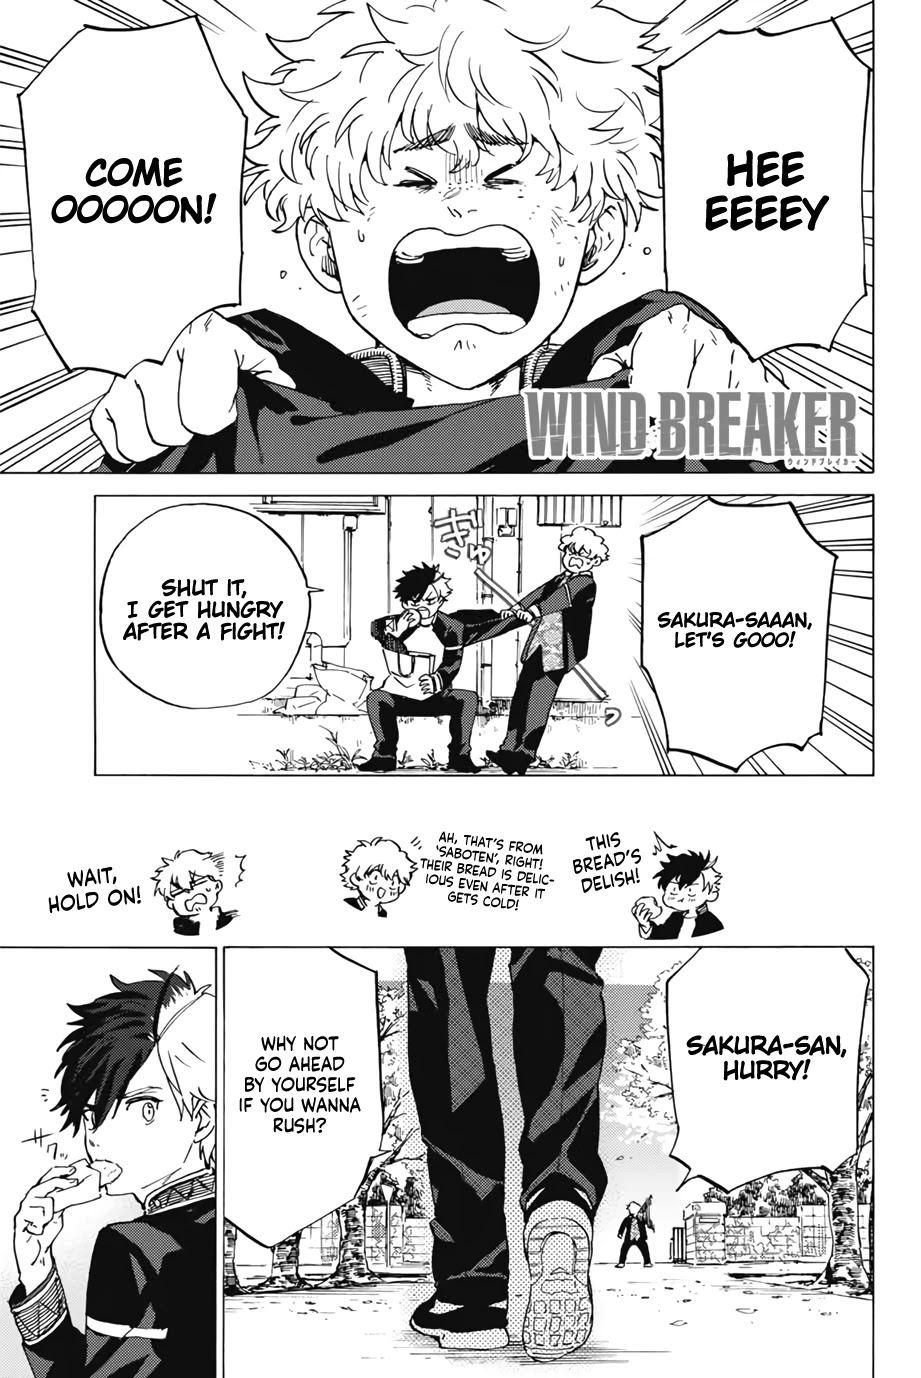 Wind Breaker (Nii Satoru) - Page 1